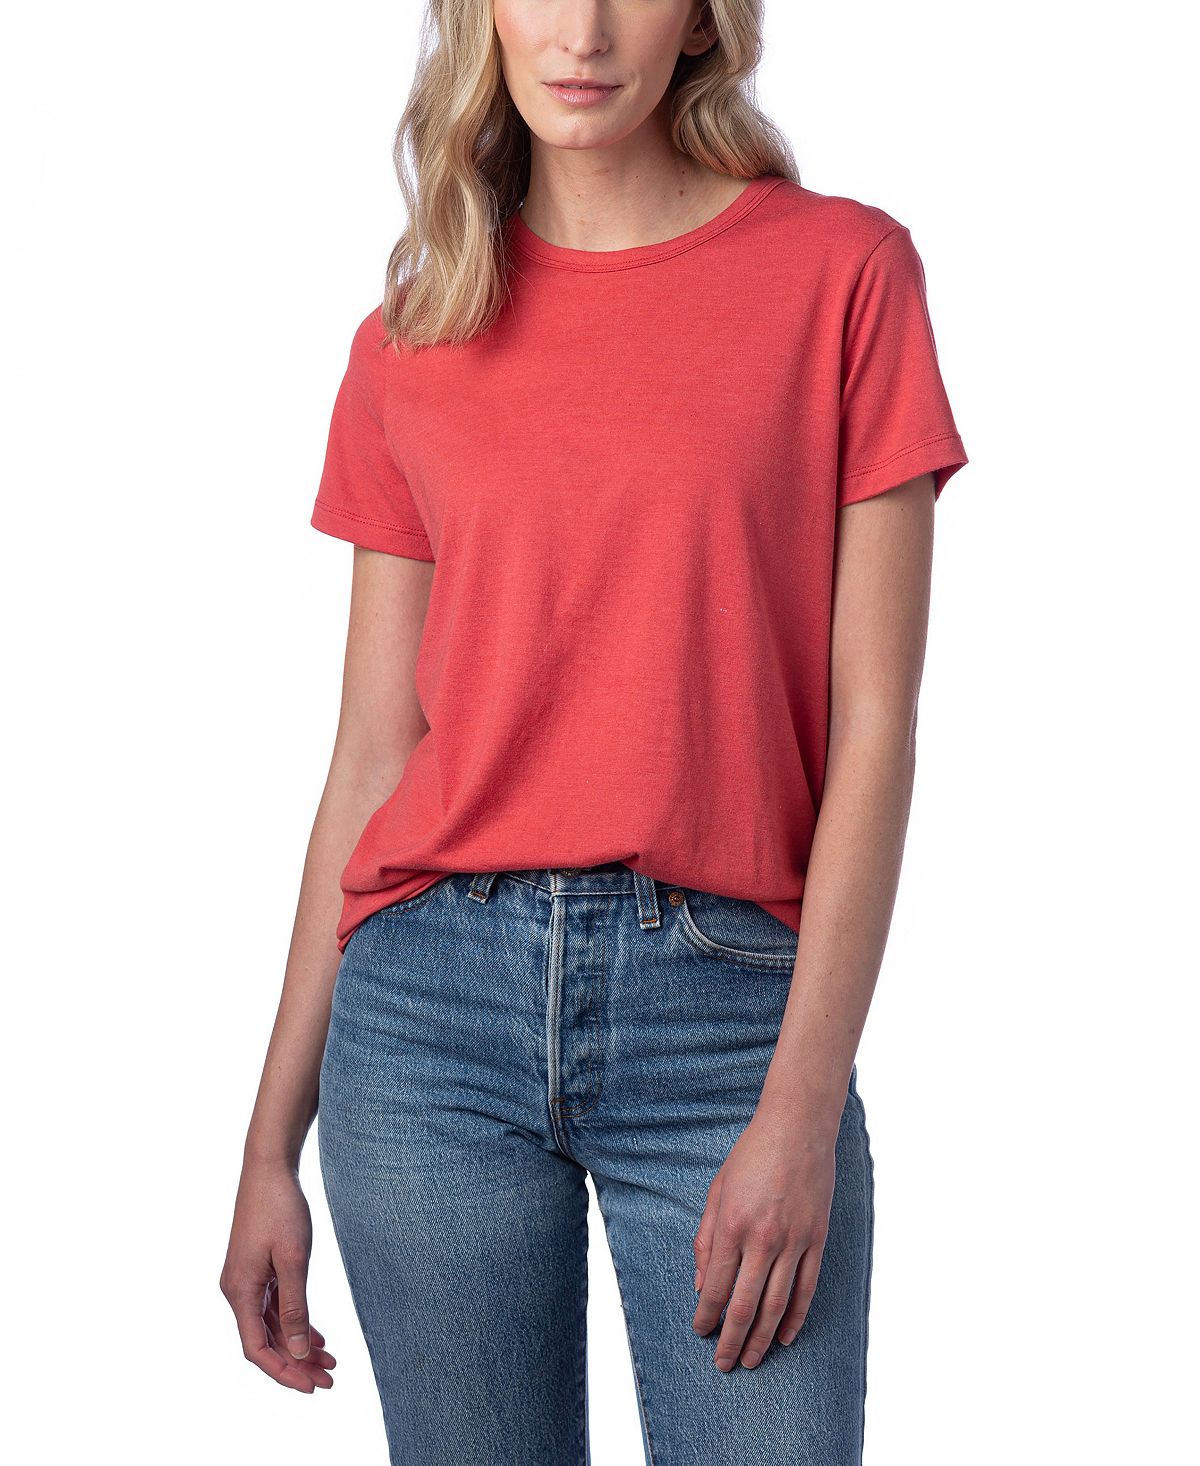 Женская футболка Tri-Blend Crew из модала Macy's женская футболка tri blend crew из модала macy s розовый